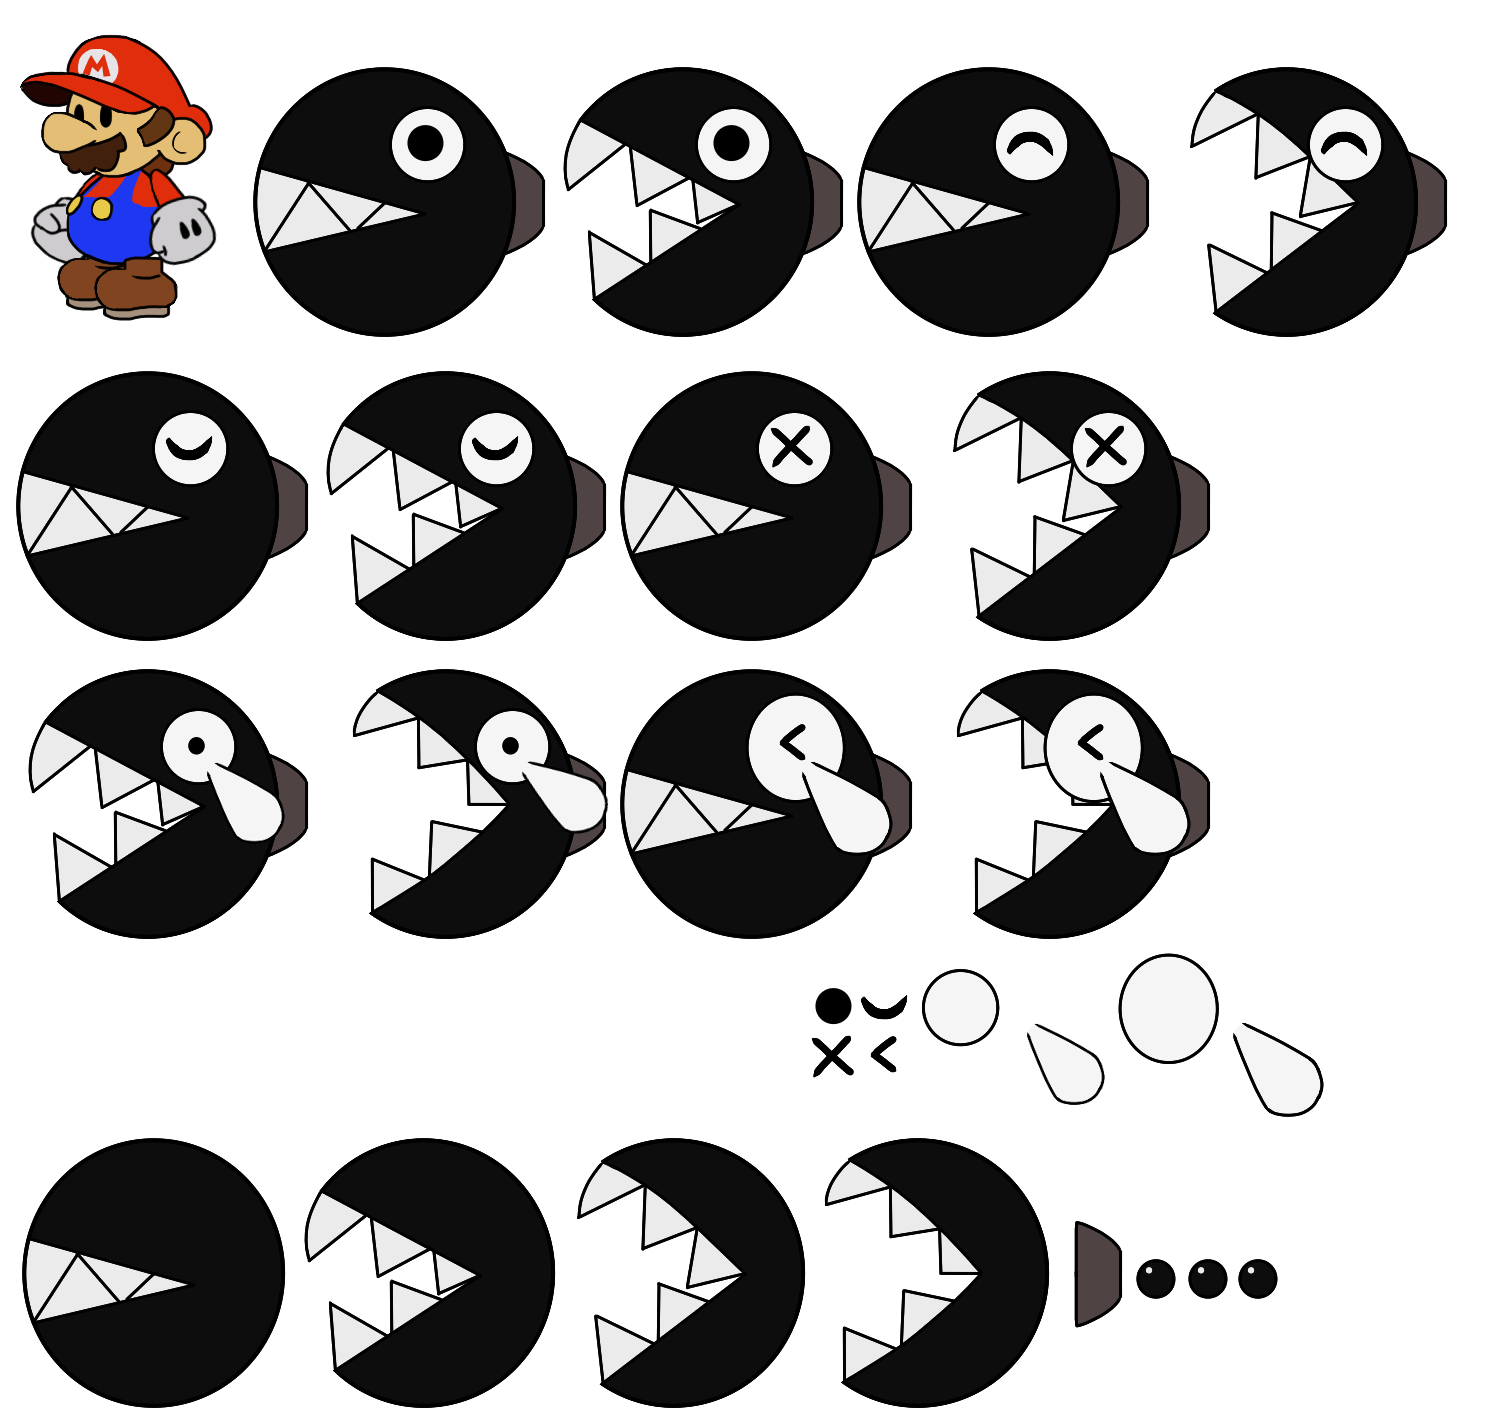 Chain Chomp (Paper Mario-Style, Modern)